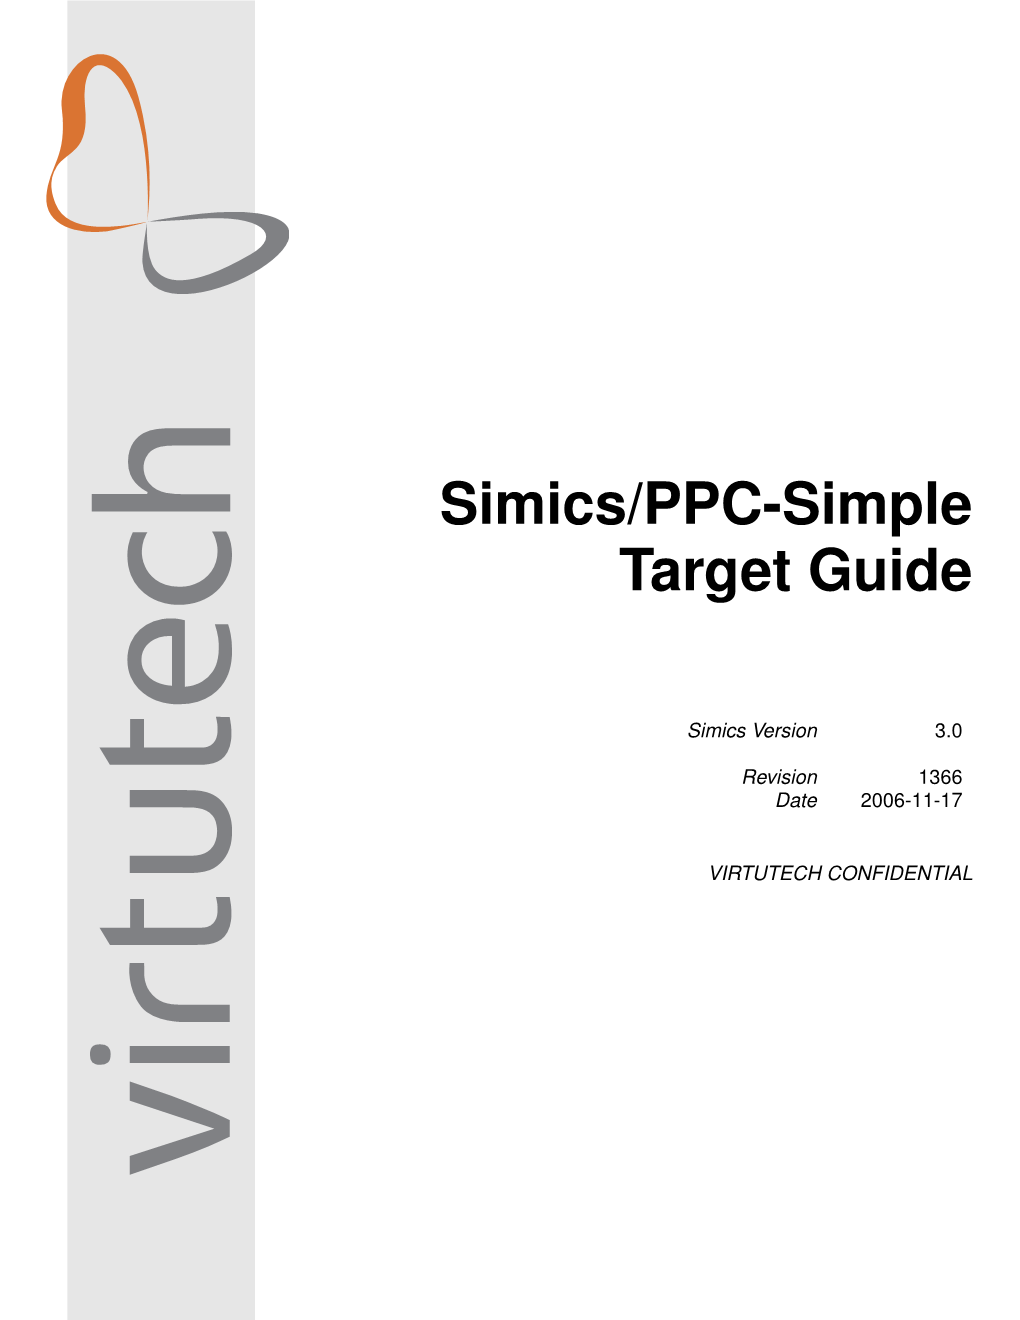 Simics/PPC-Simple Target Guide